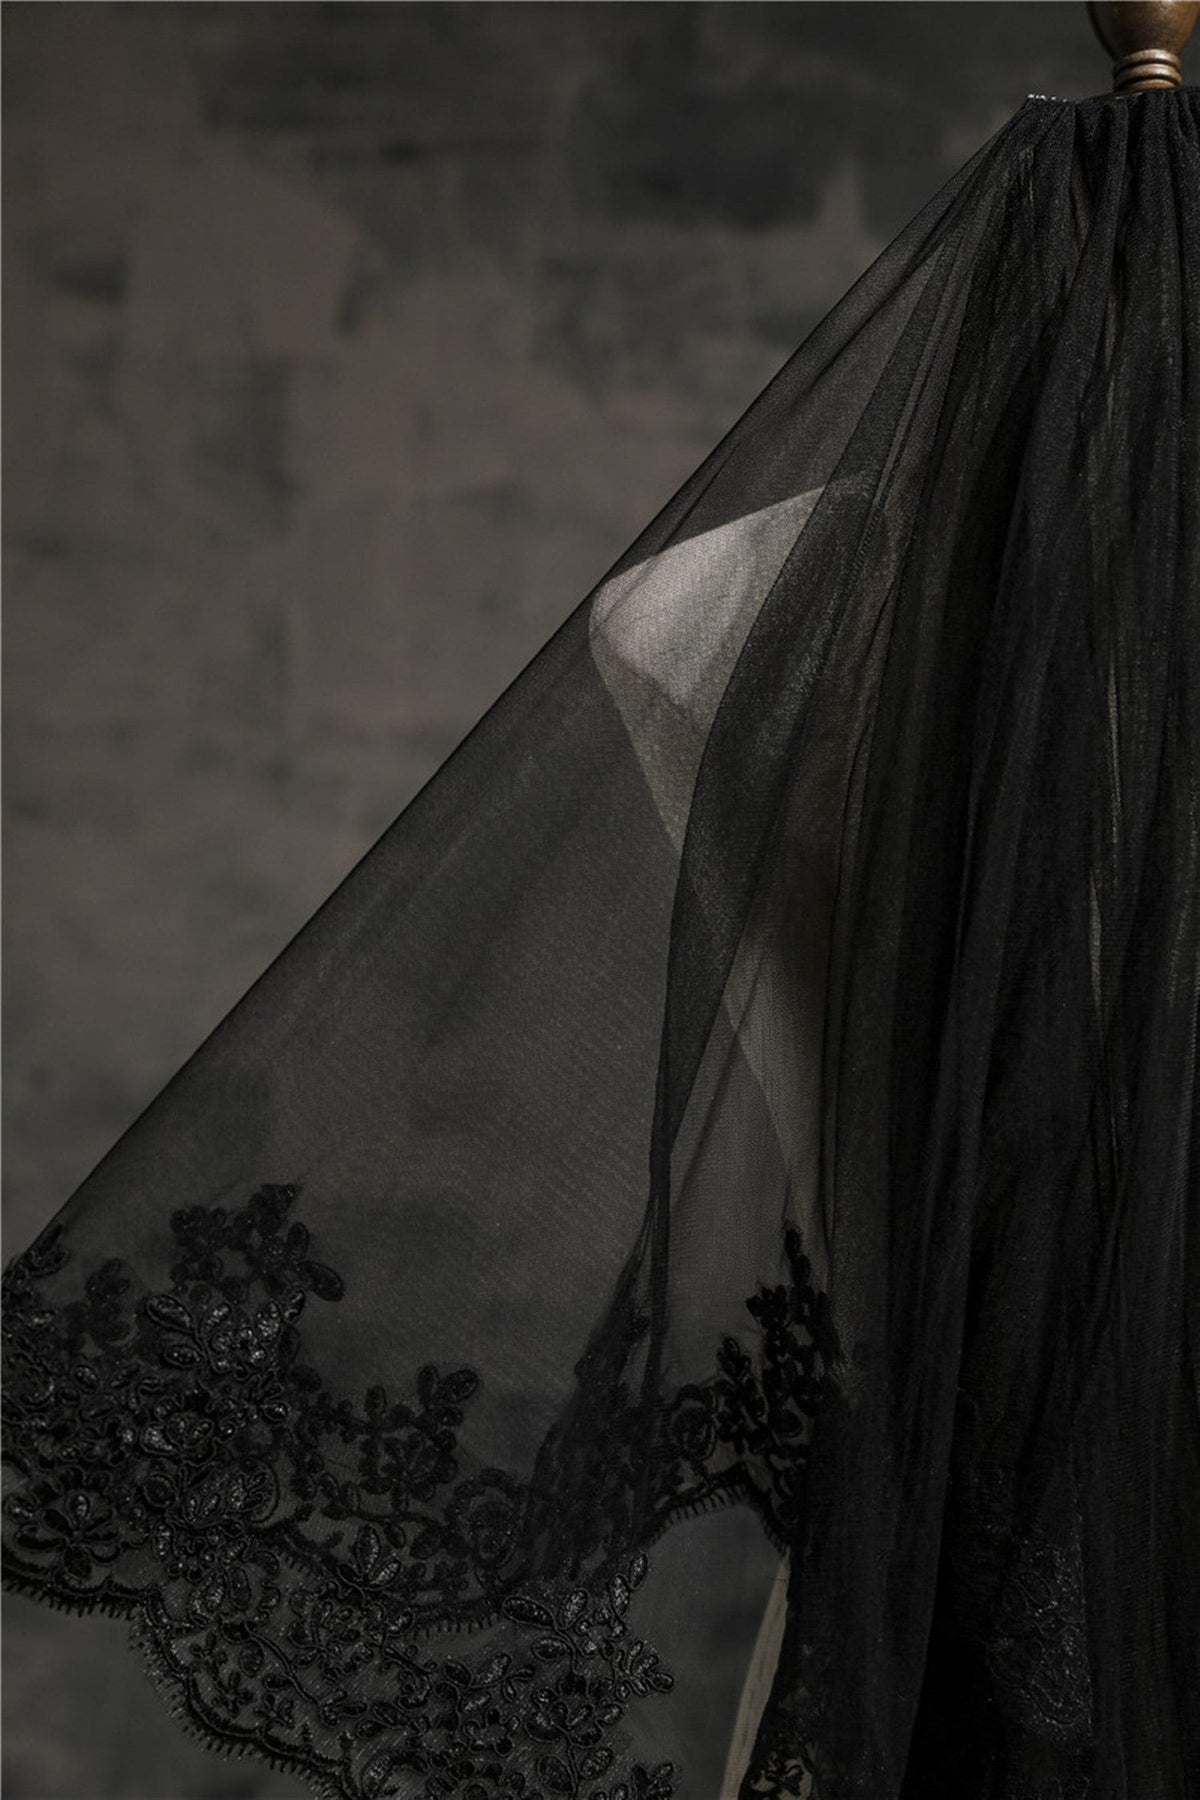 Unconventional Gothic Black Bridal Veils SoftTulle Fingertip Wedding Veil Luxury 3 feet Lace Edge 2 Tiers